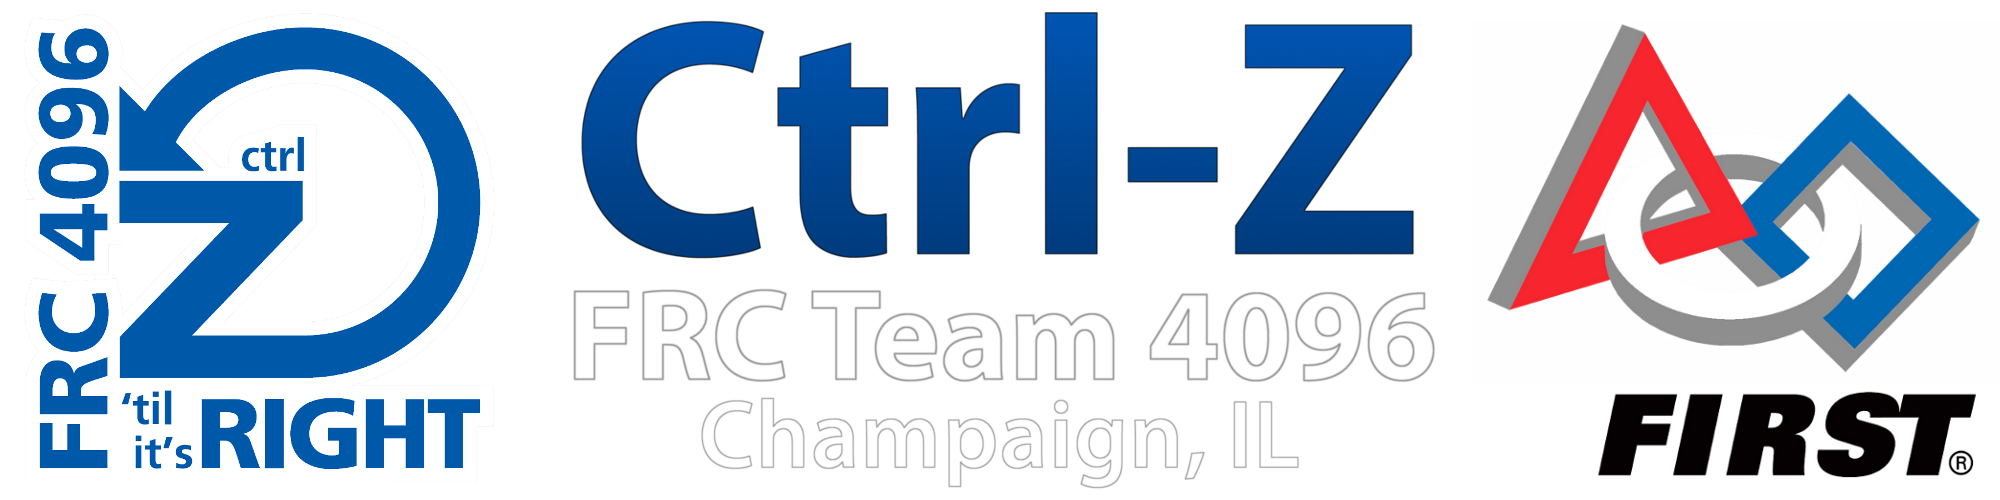 FIRST FRC Team 4096: Ctrl-Z